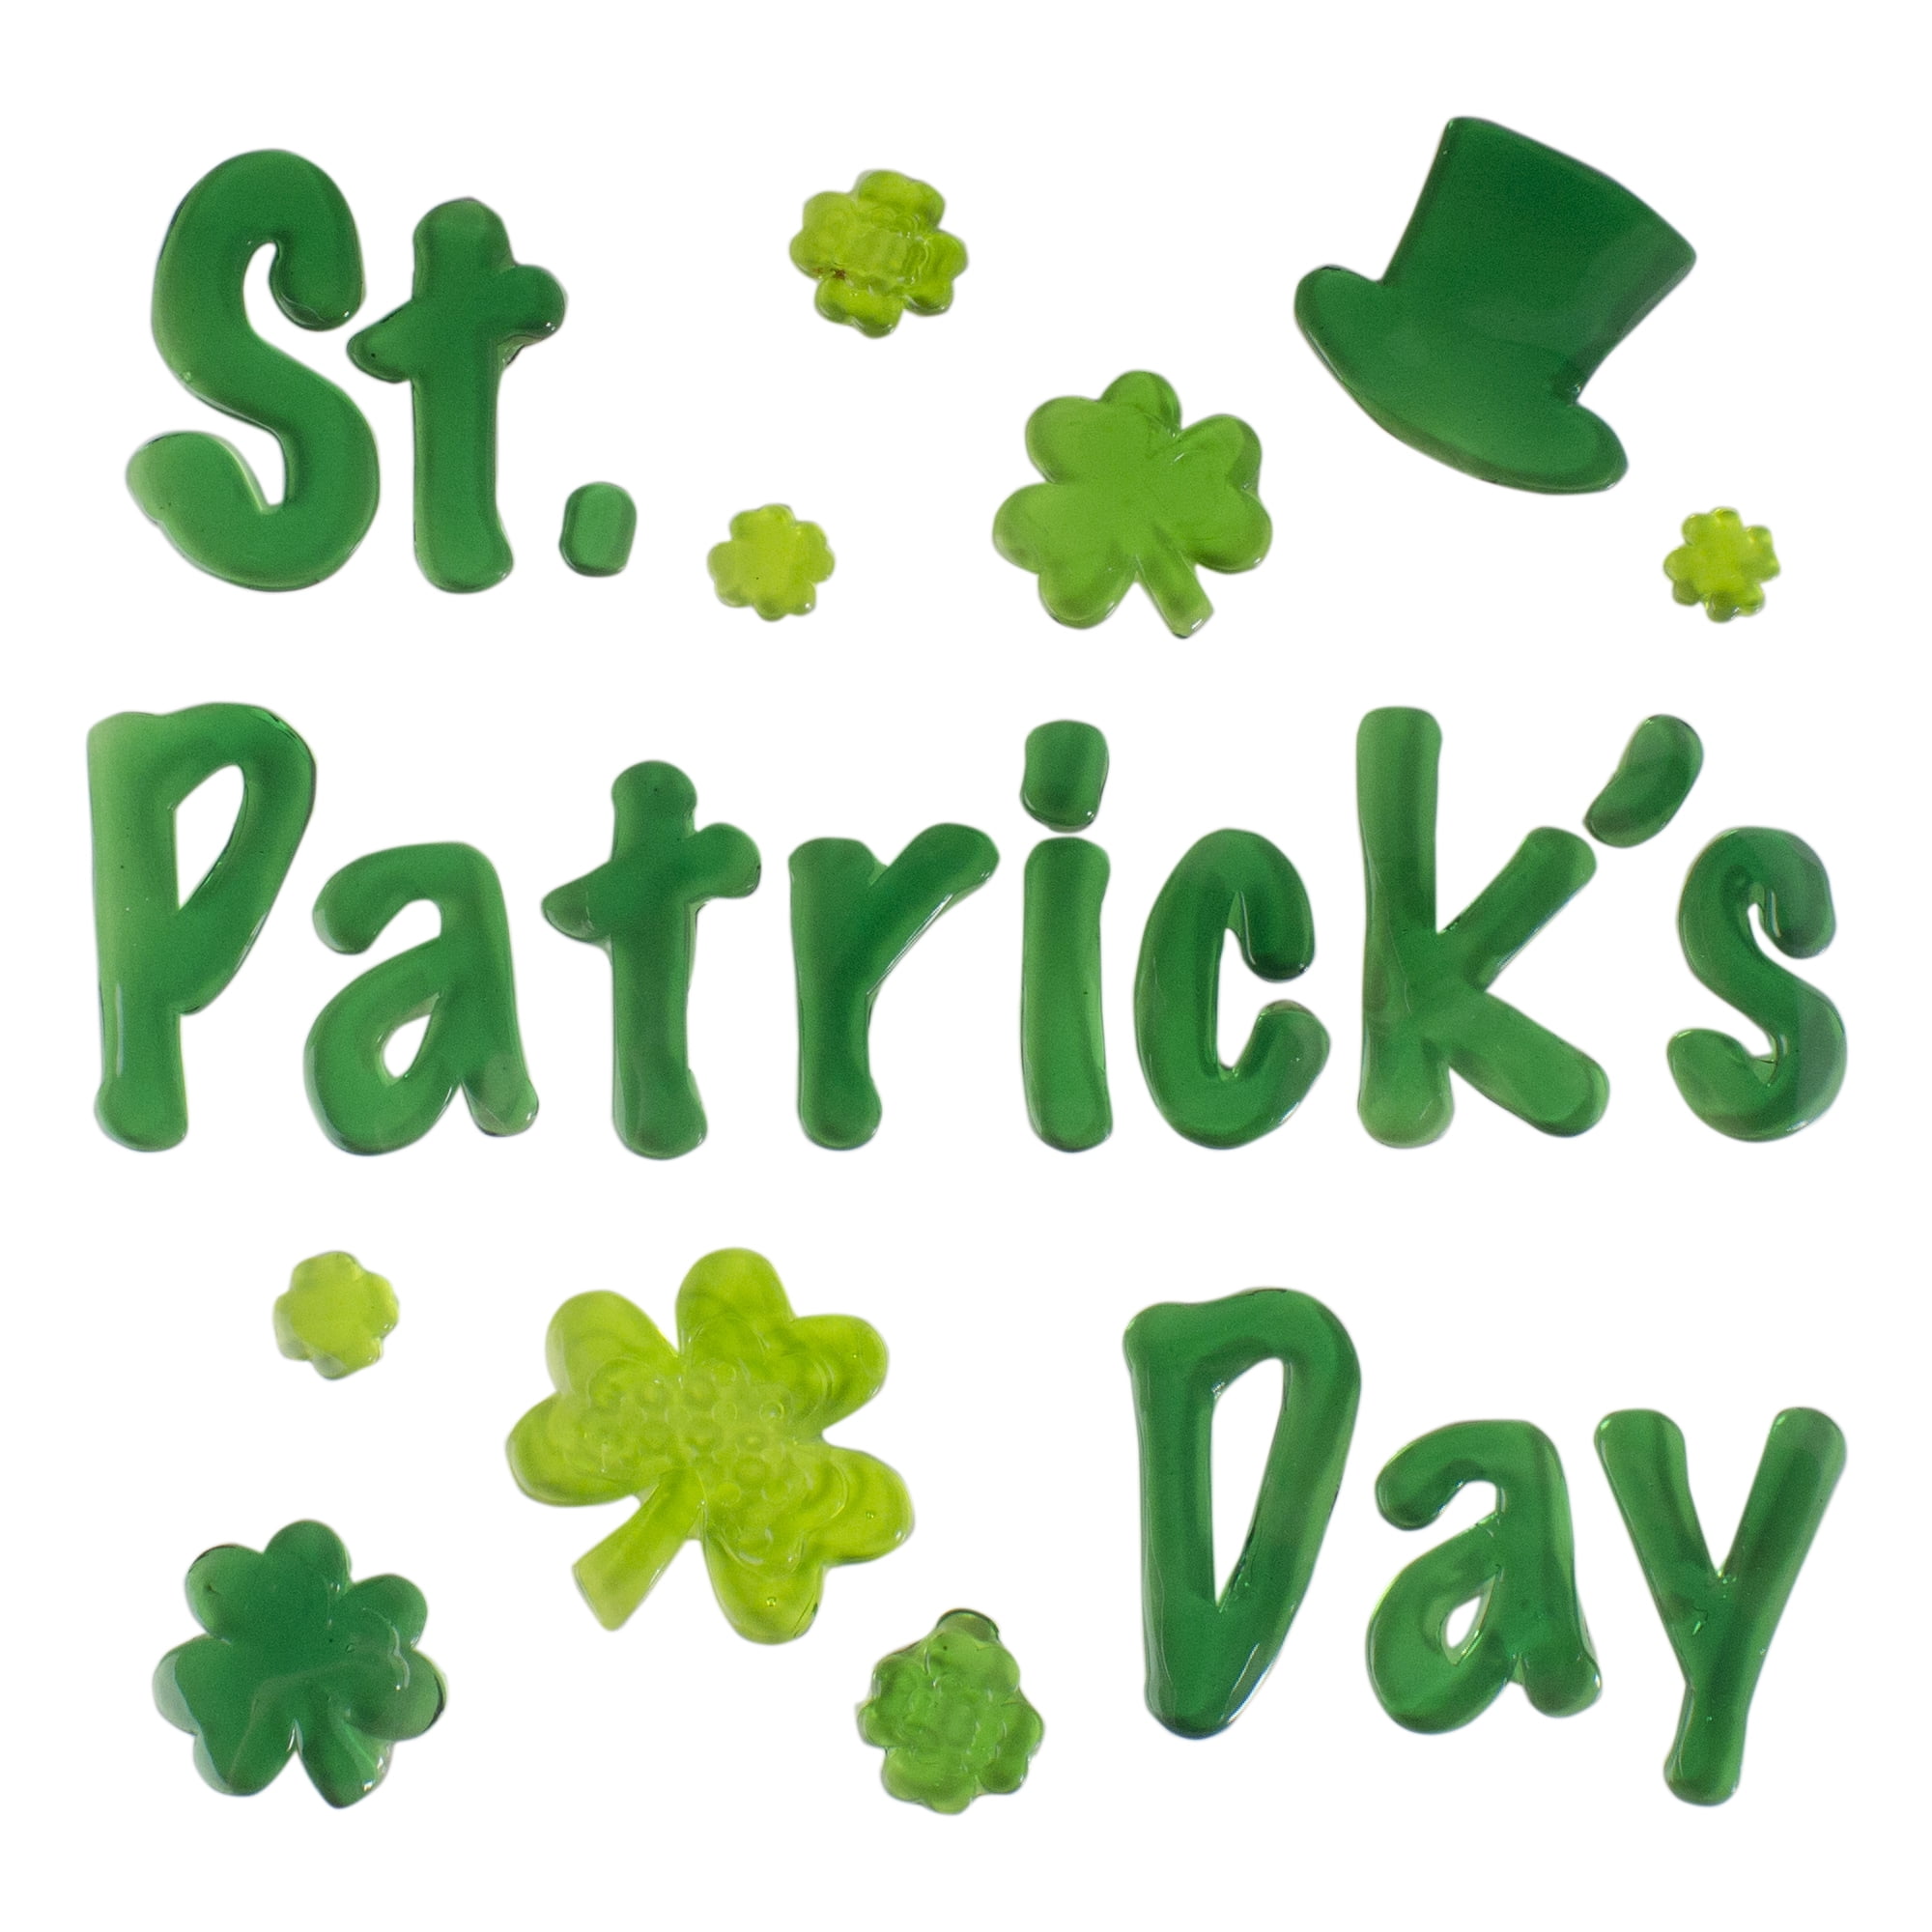 Patrick's Day Decoration Clings Green Shamrocks 3-leaf clovers windows  NEW St 